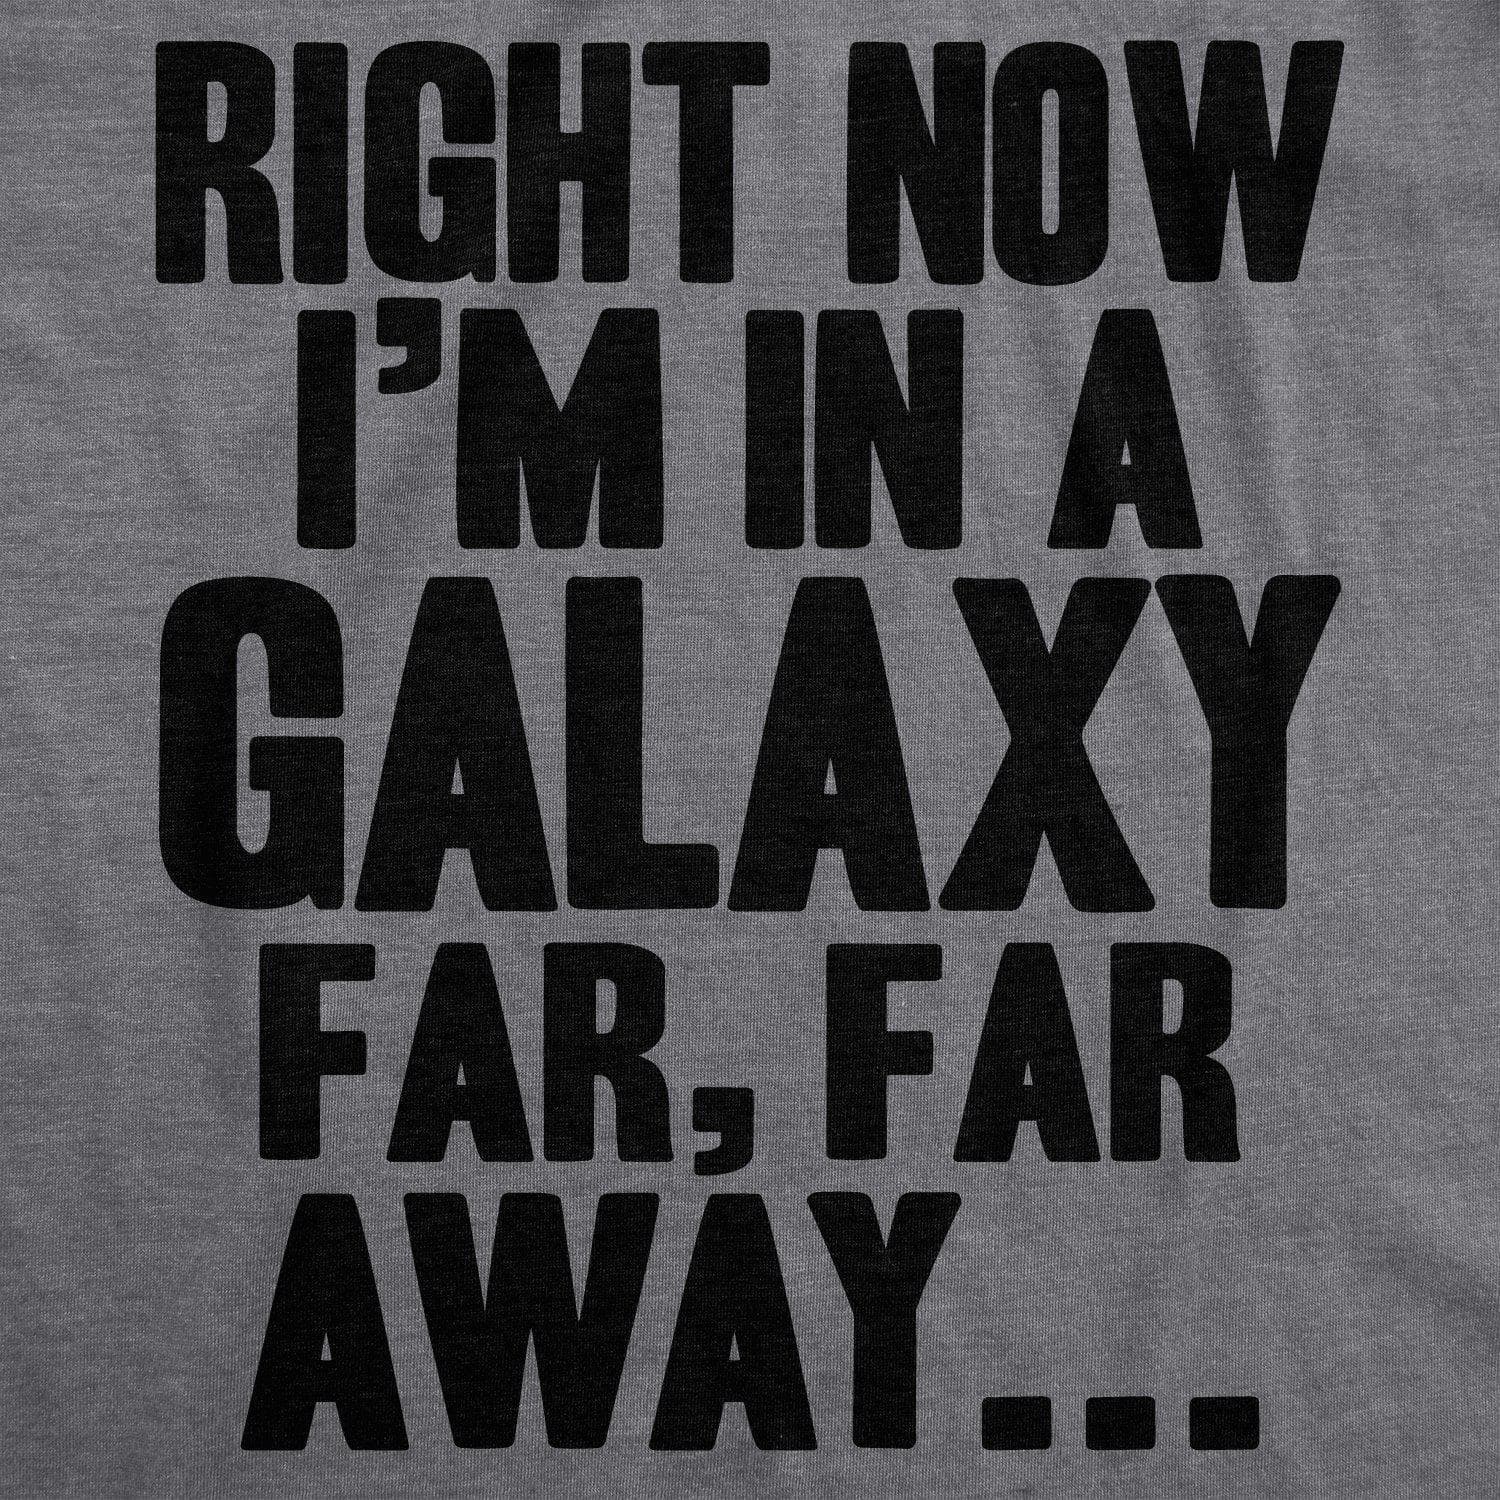 Right Now I'm In a Galaxy Far, Far Away Men's Tshirt  -  Crazy Dog T-Shirts